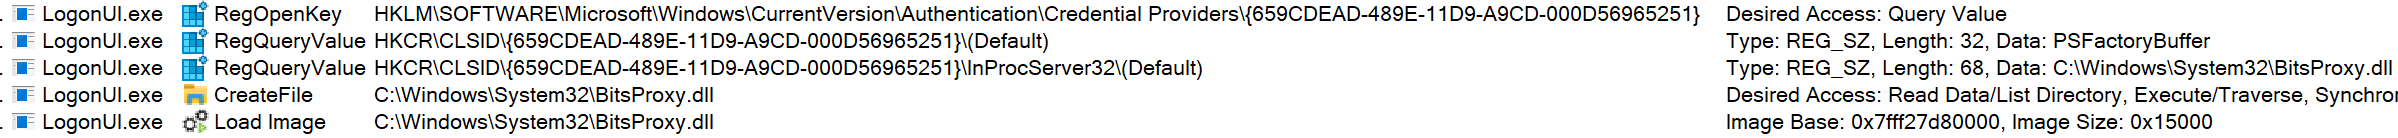 credential provider LogonUI2